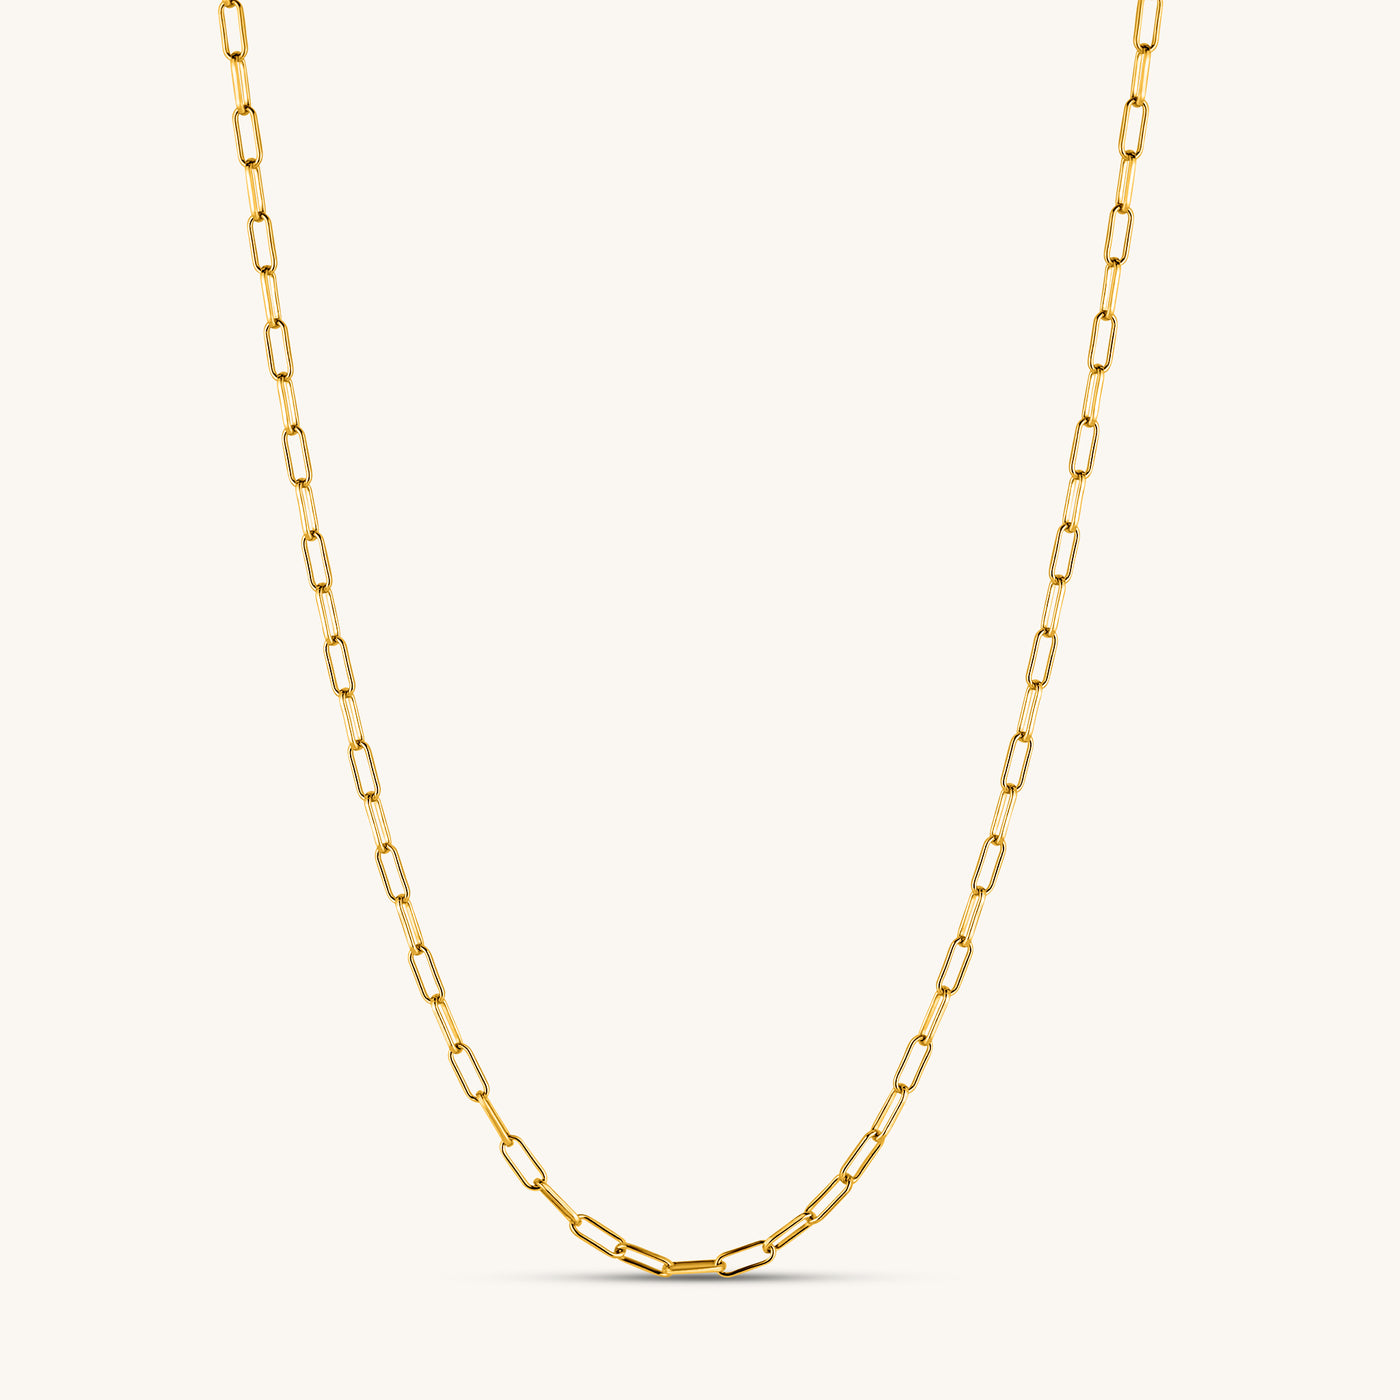 Modern Simple Minimalist Jewelry Women's Necklace Choker boyfriend paper clip bold chain 2.3mm 18k Gold layered on 925 Sterling Silver